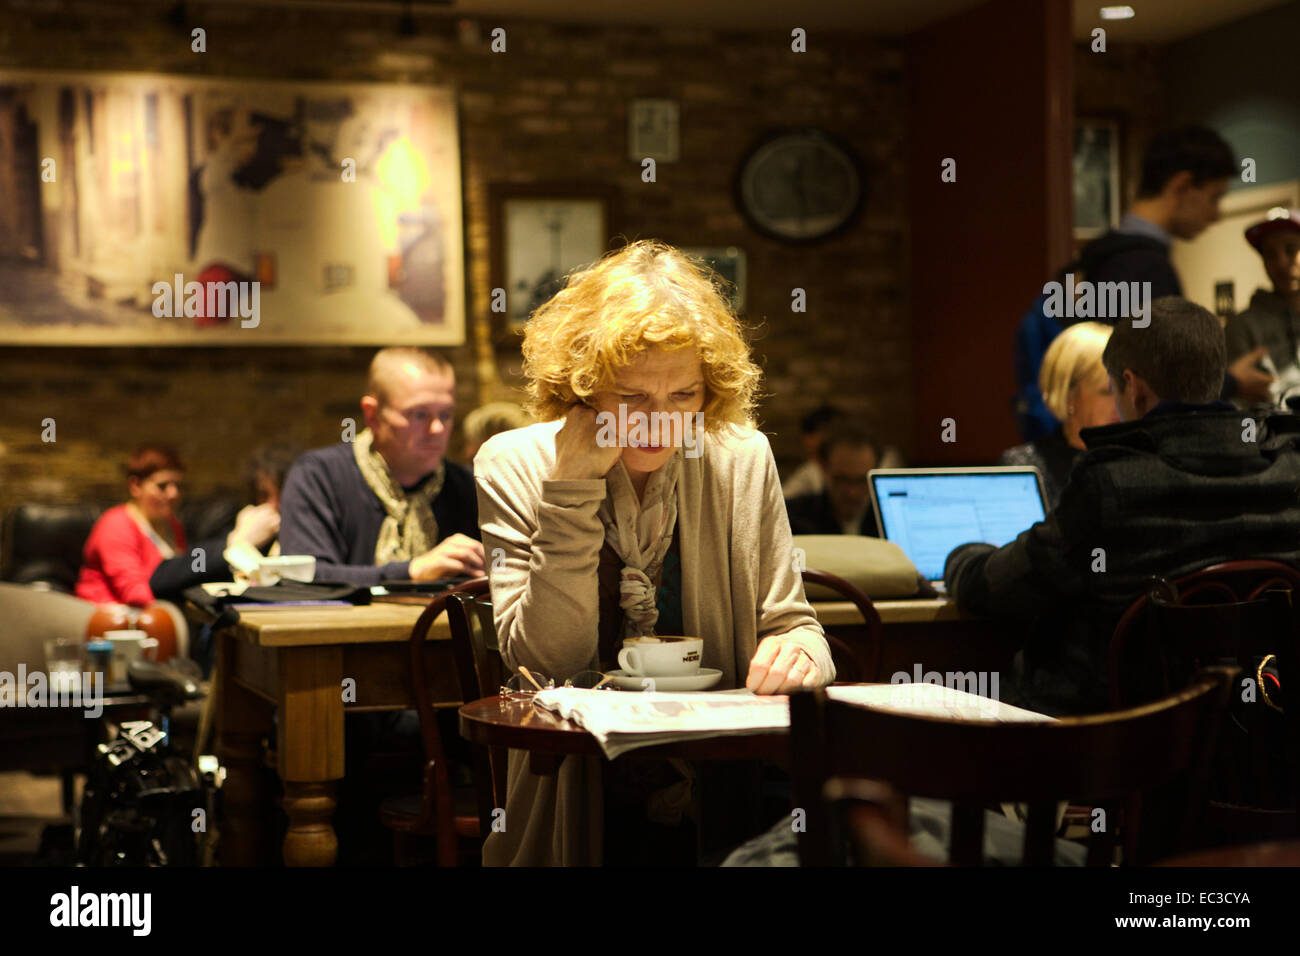 Caffe Nero coffee shop interior, London UK. Customers: sitting alone. City Life. Loneliness. Coffee bar London. Stock Photo